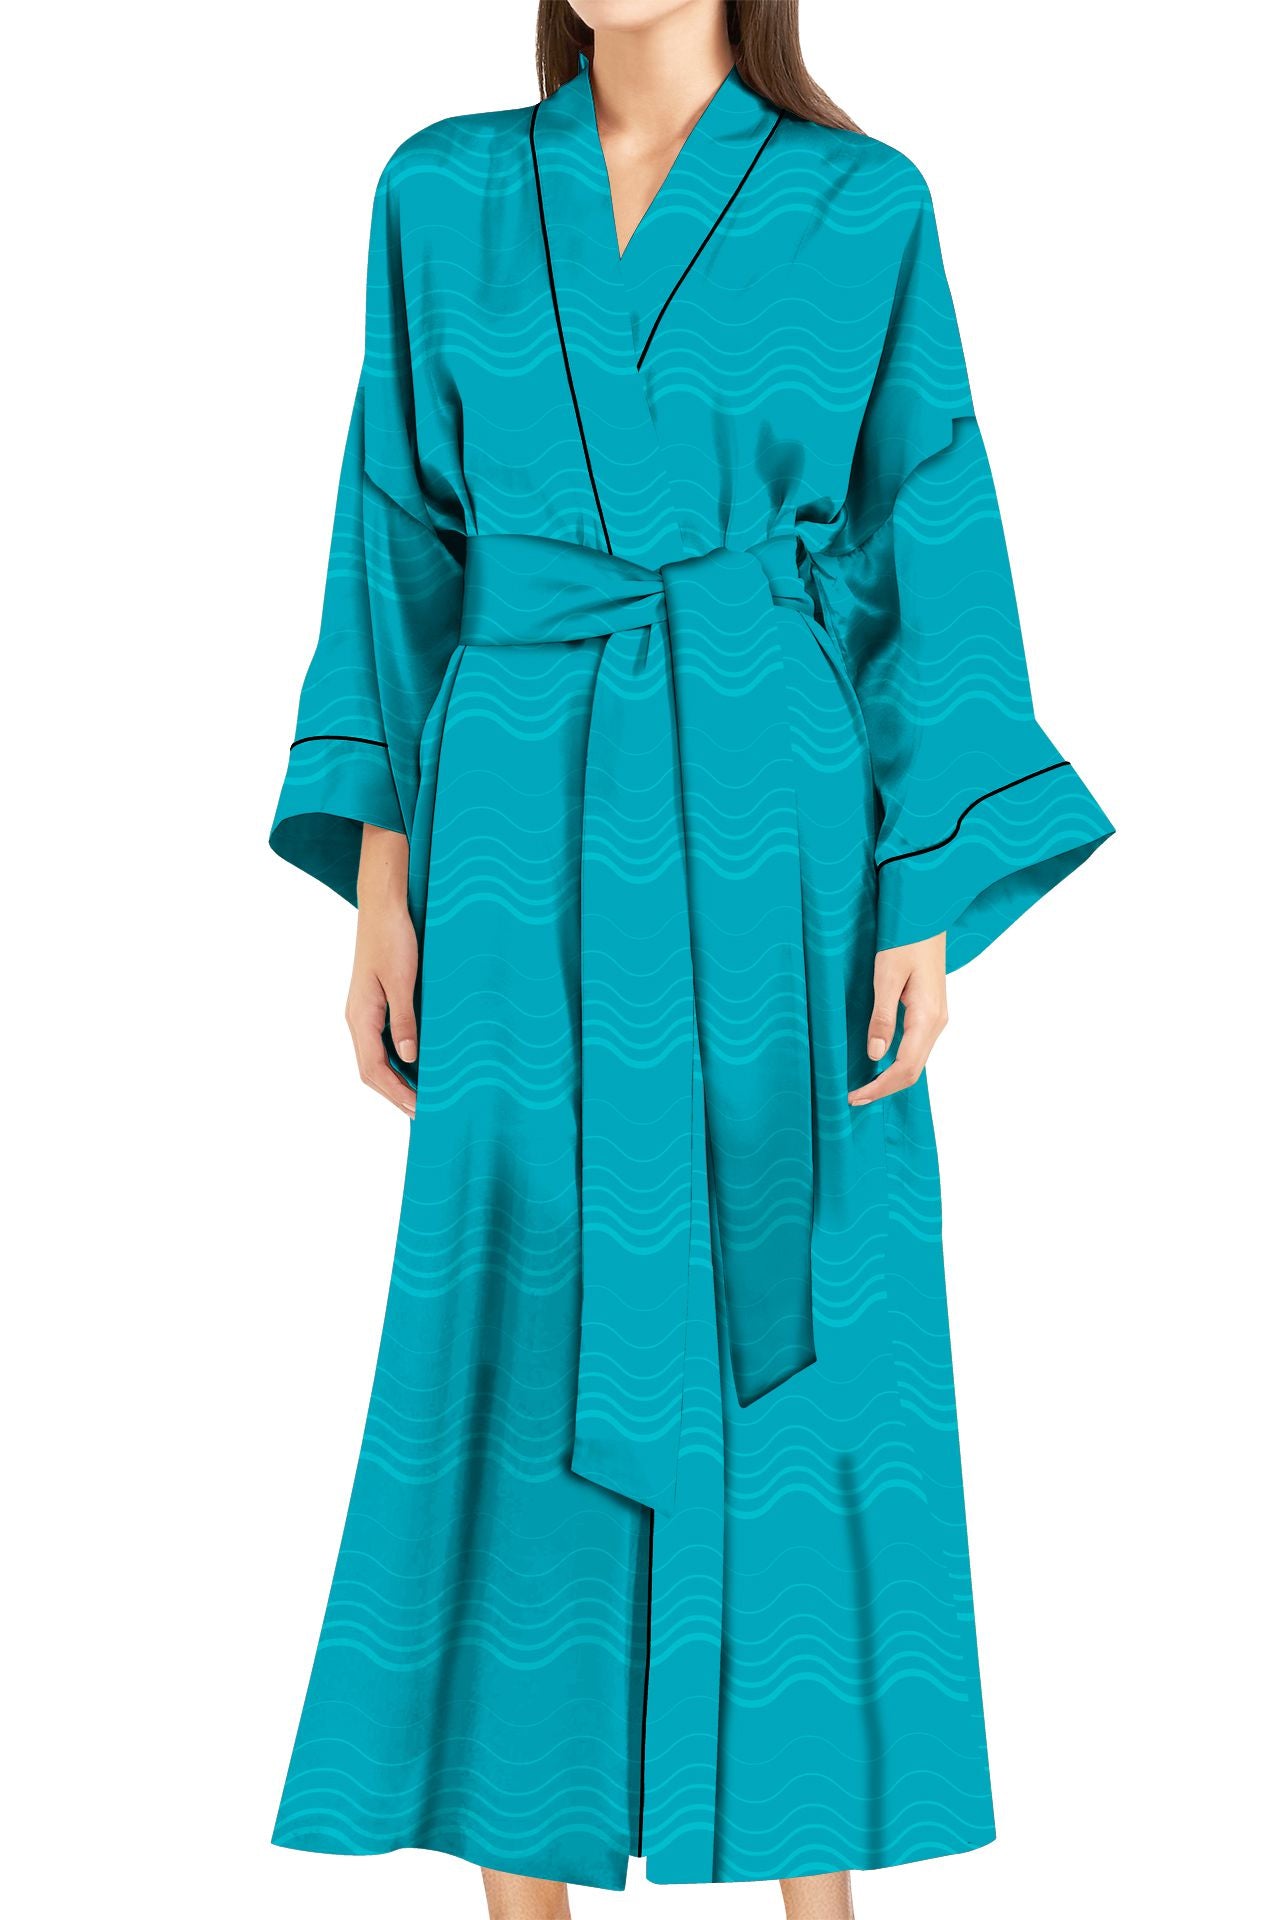 "Kyle X Shahida" "blue kimono" "silk robes for women short" "sky blue kimono"